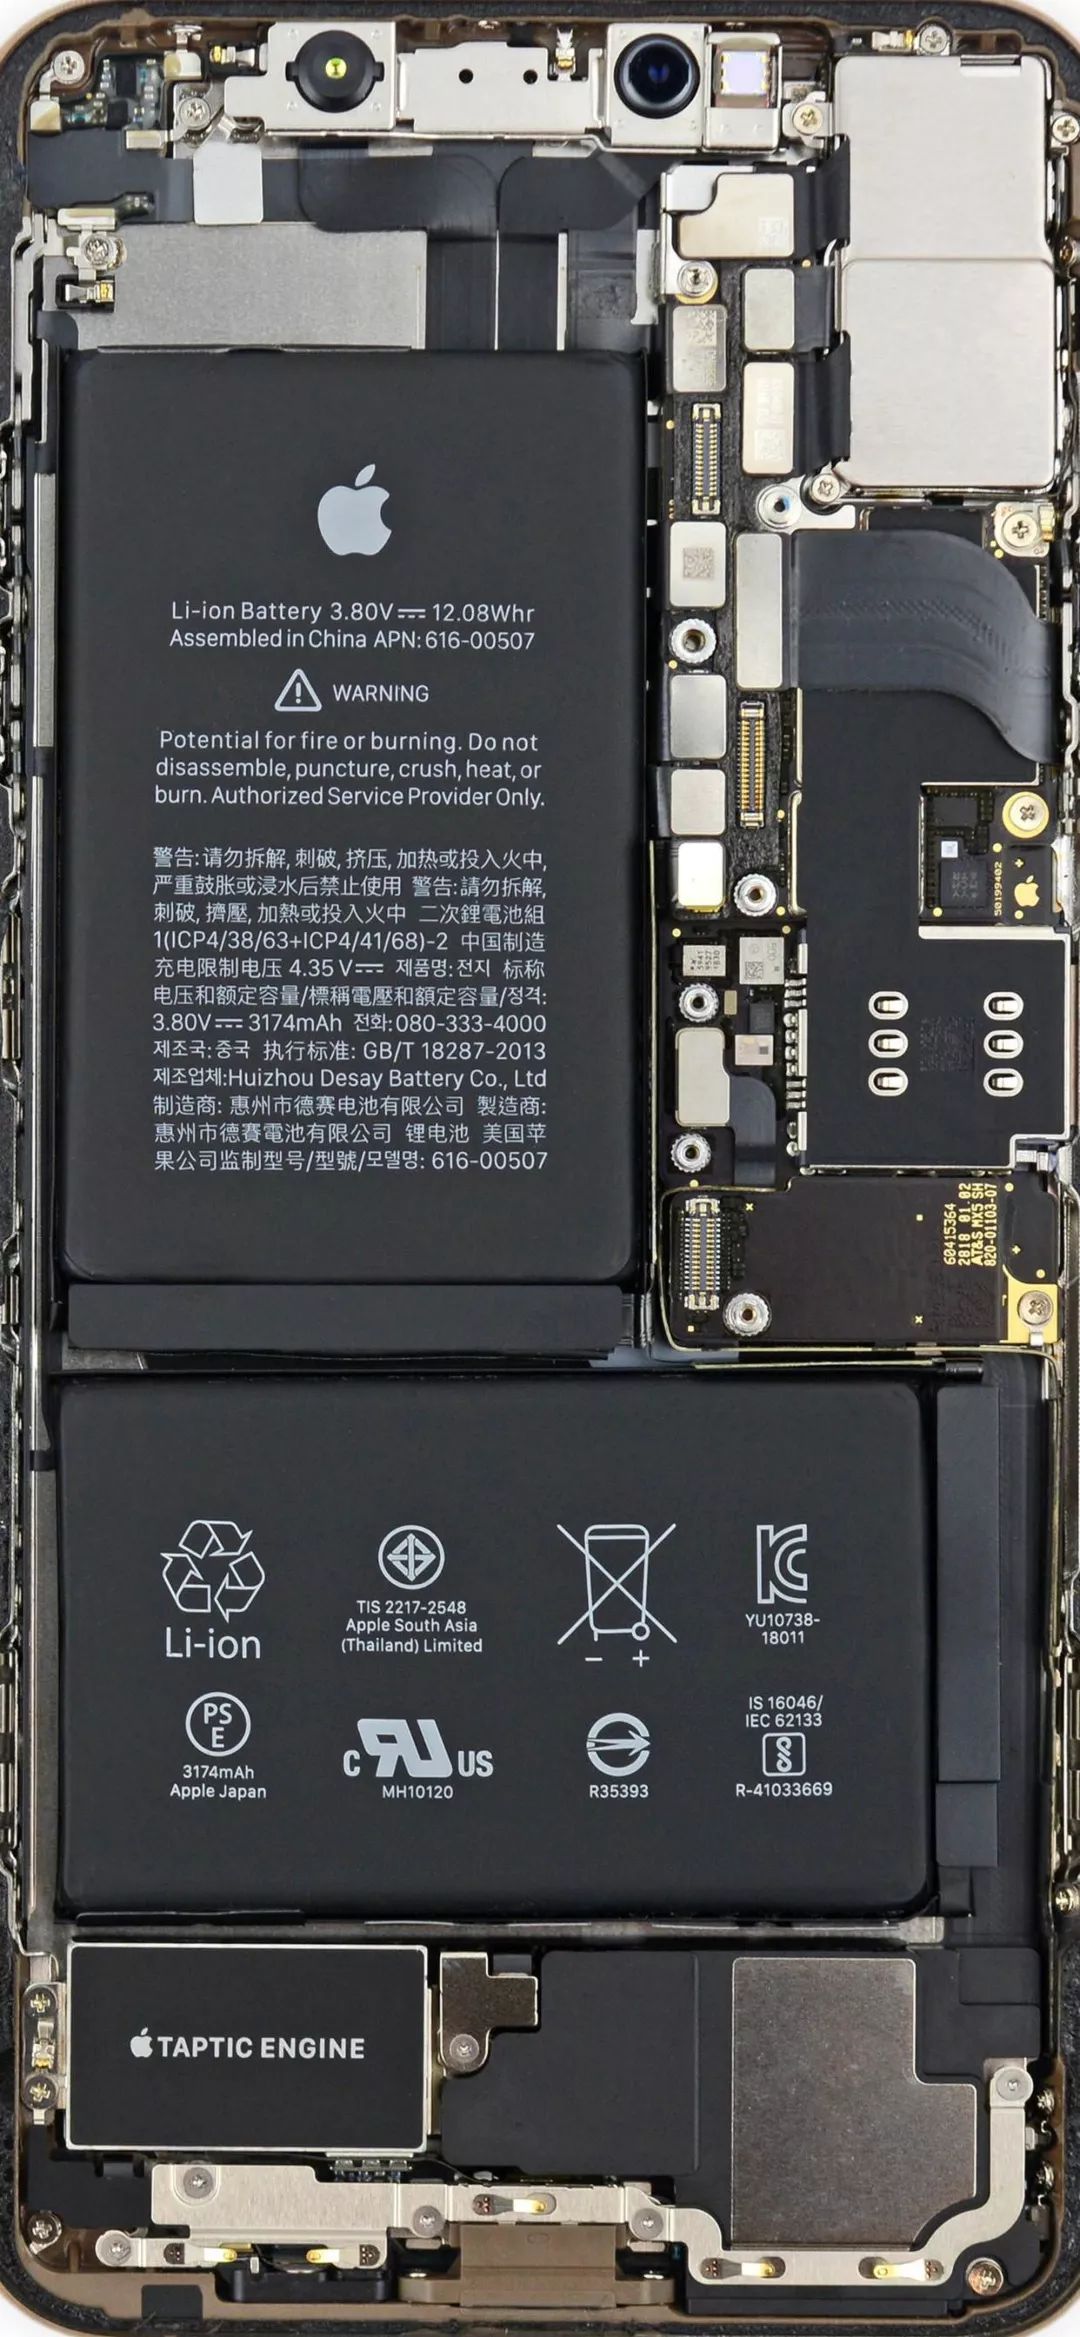 iPhone 6s Plus teardown reveals a 165 mAh battery downgrade versus last year's iPhone 6 Plus